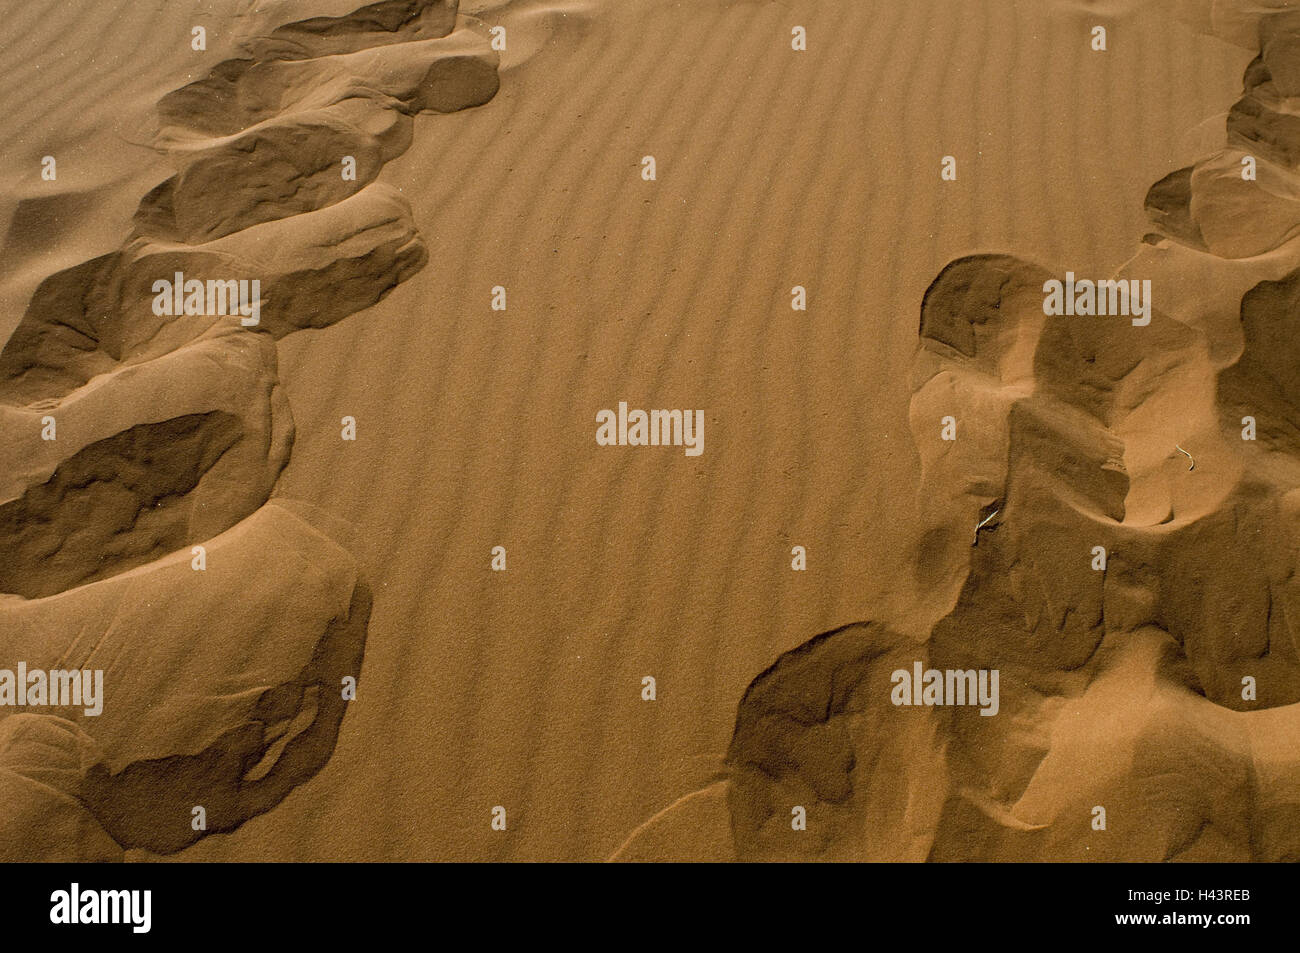 Africa, Namibia, Namibrand pool, Namibwüste, Wolwedans, sandy soil, tracks, scenery, dune, Sand dune, Sand, footprints, impressions, detailed view, nobody, Rippelmarken, background, Stock Photo